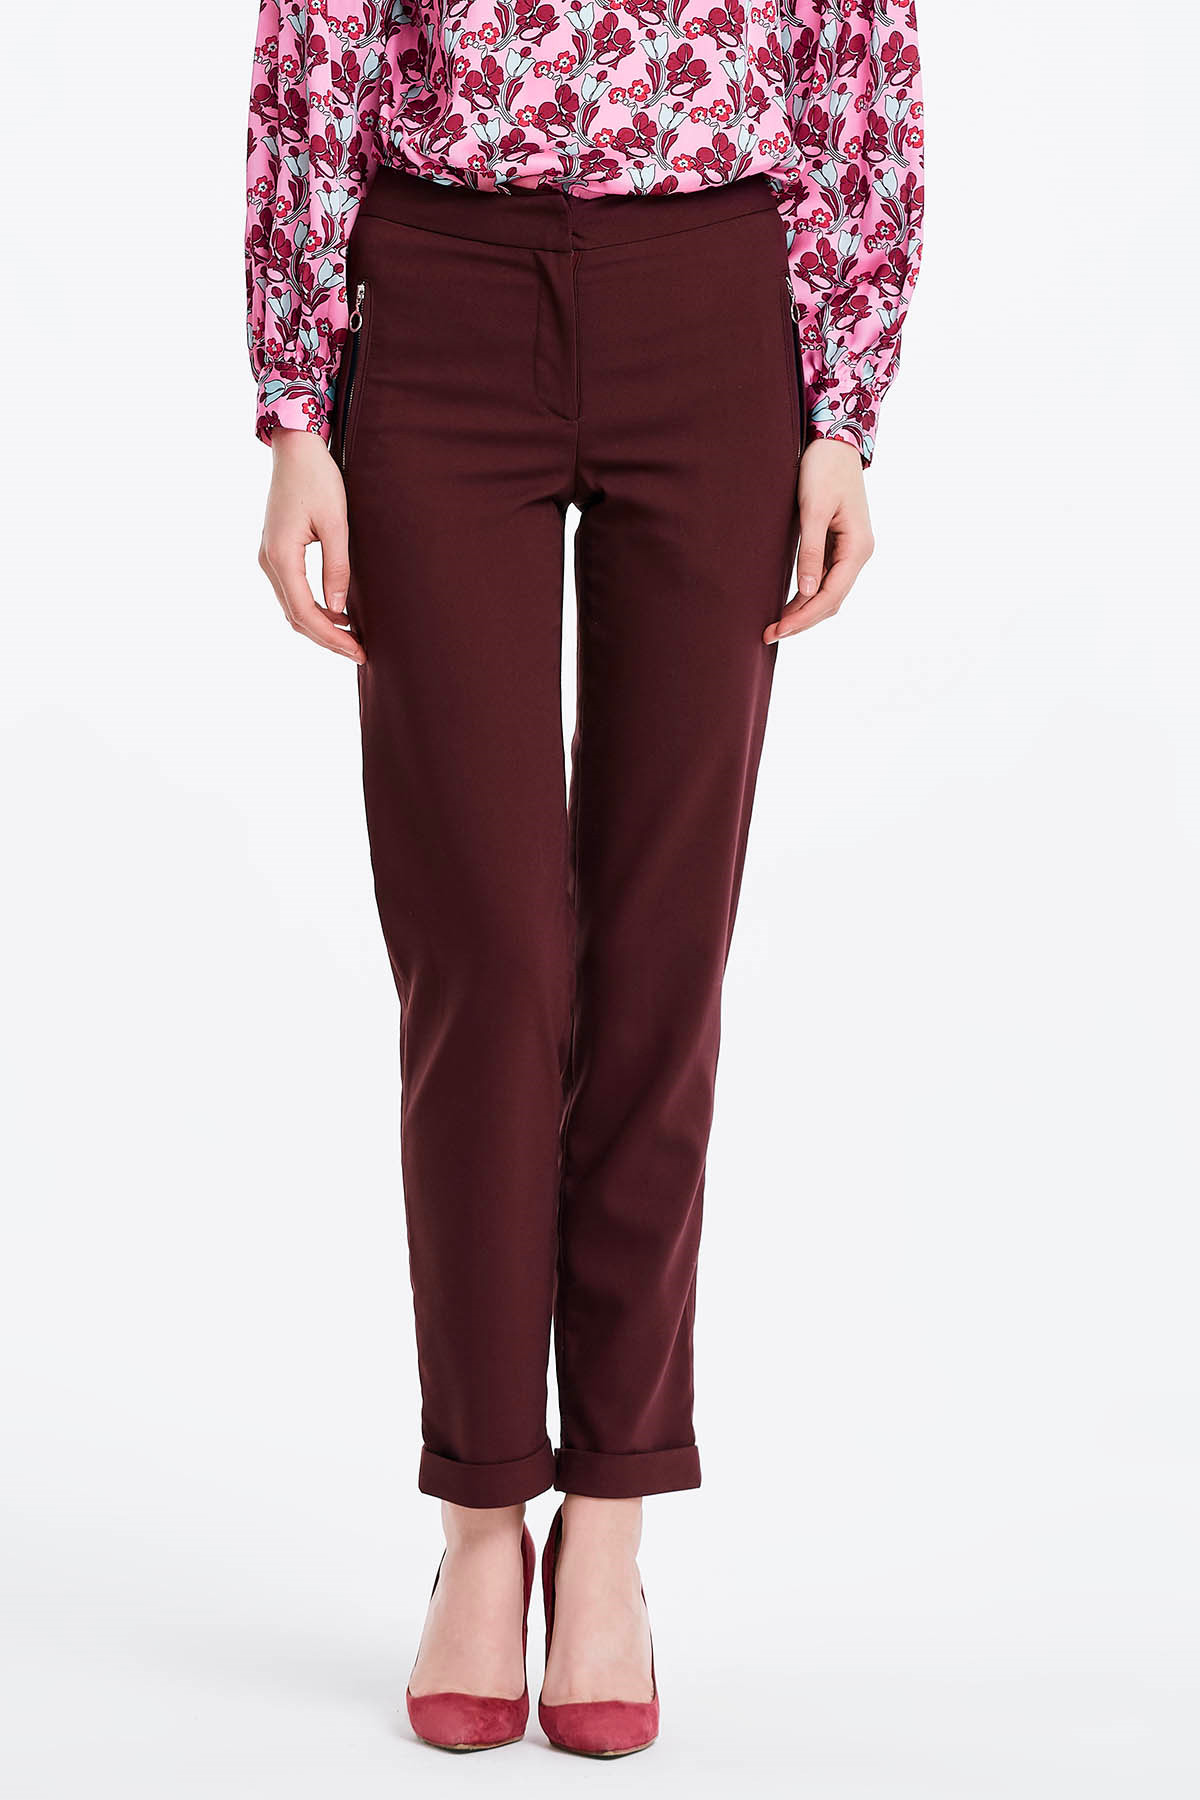 Short burgundy trousers , photo 1